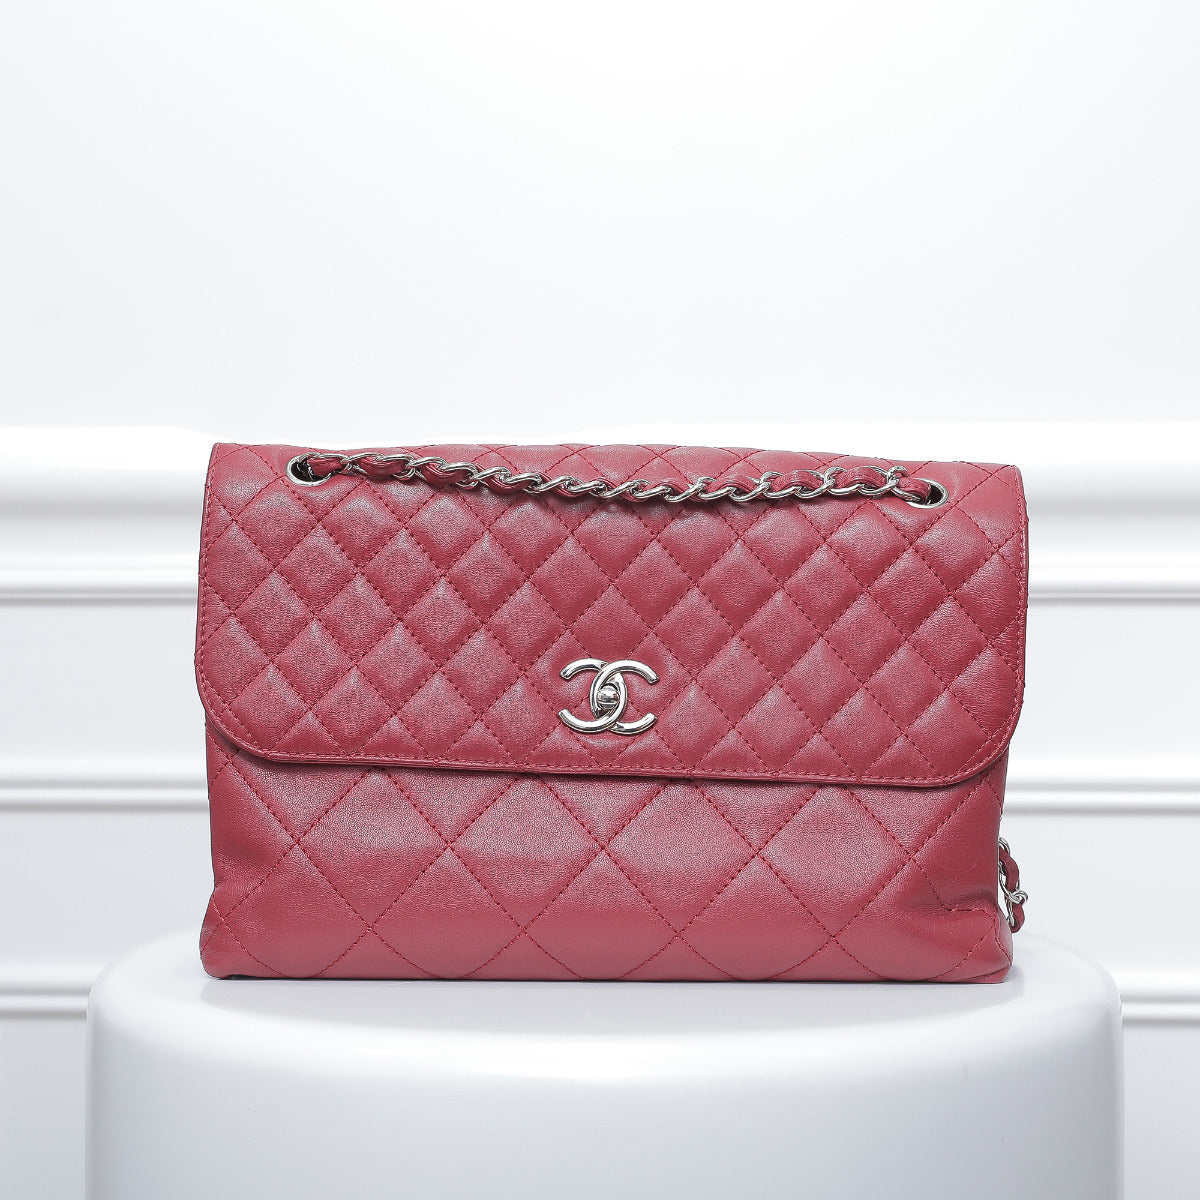 Chanel Red Business Flap Jumbo Bag